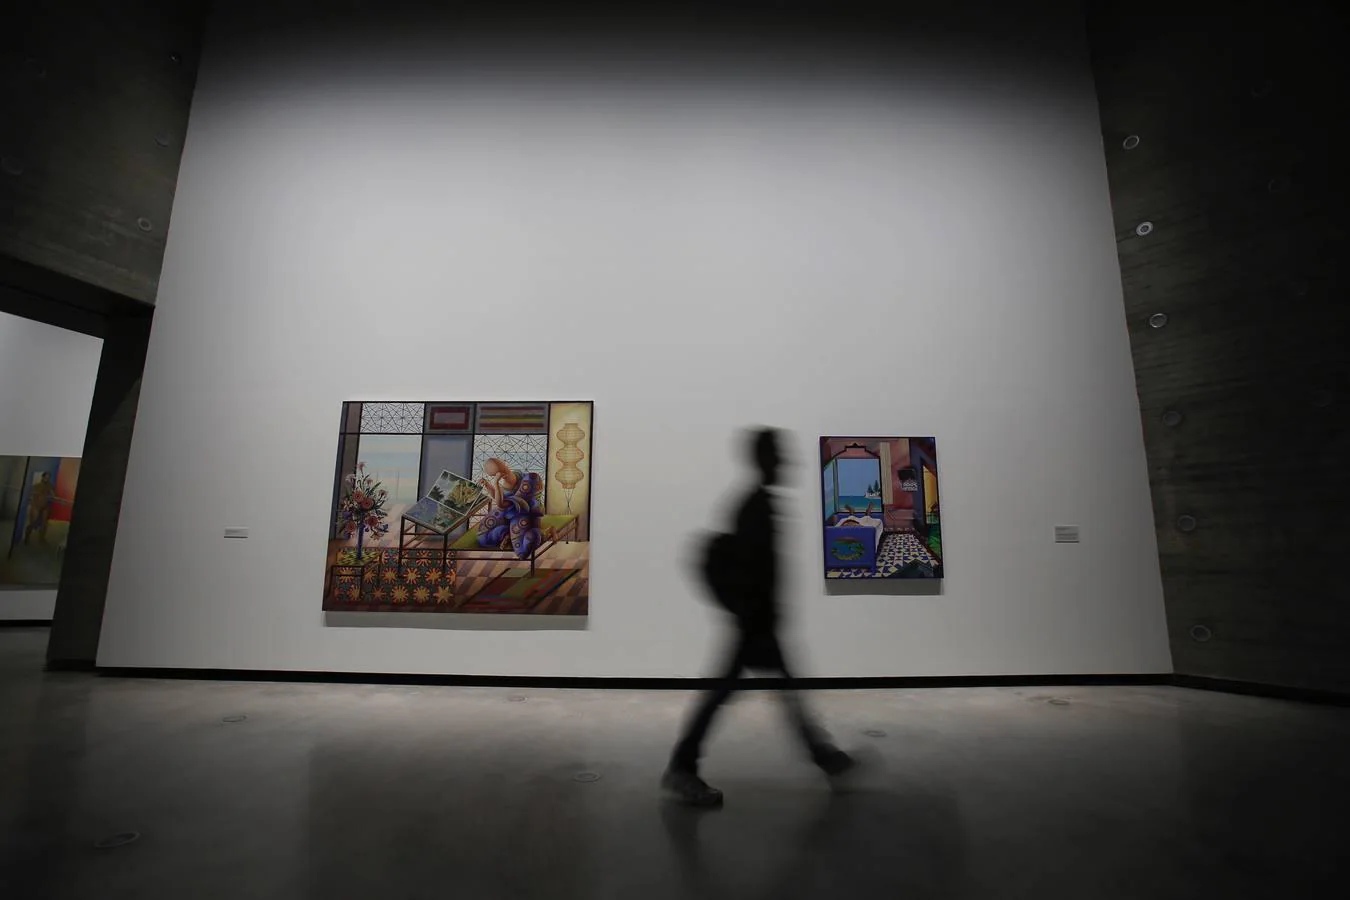 La exposición de Guillermo Pérez Villalta en Córdoba, en imágenes